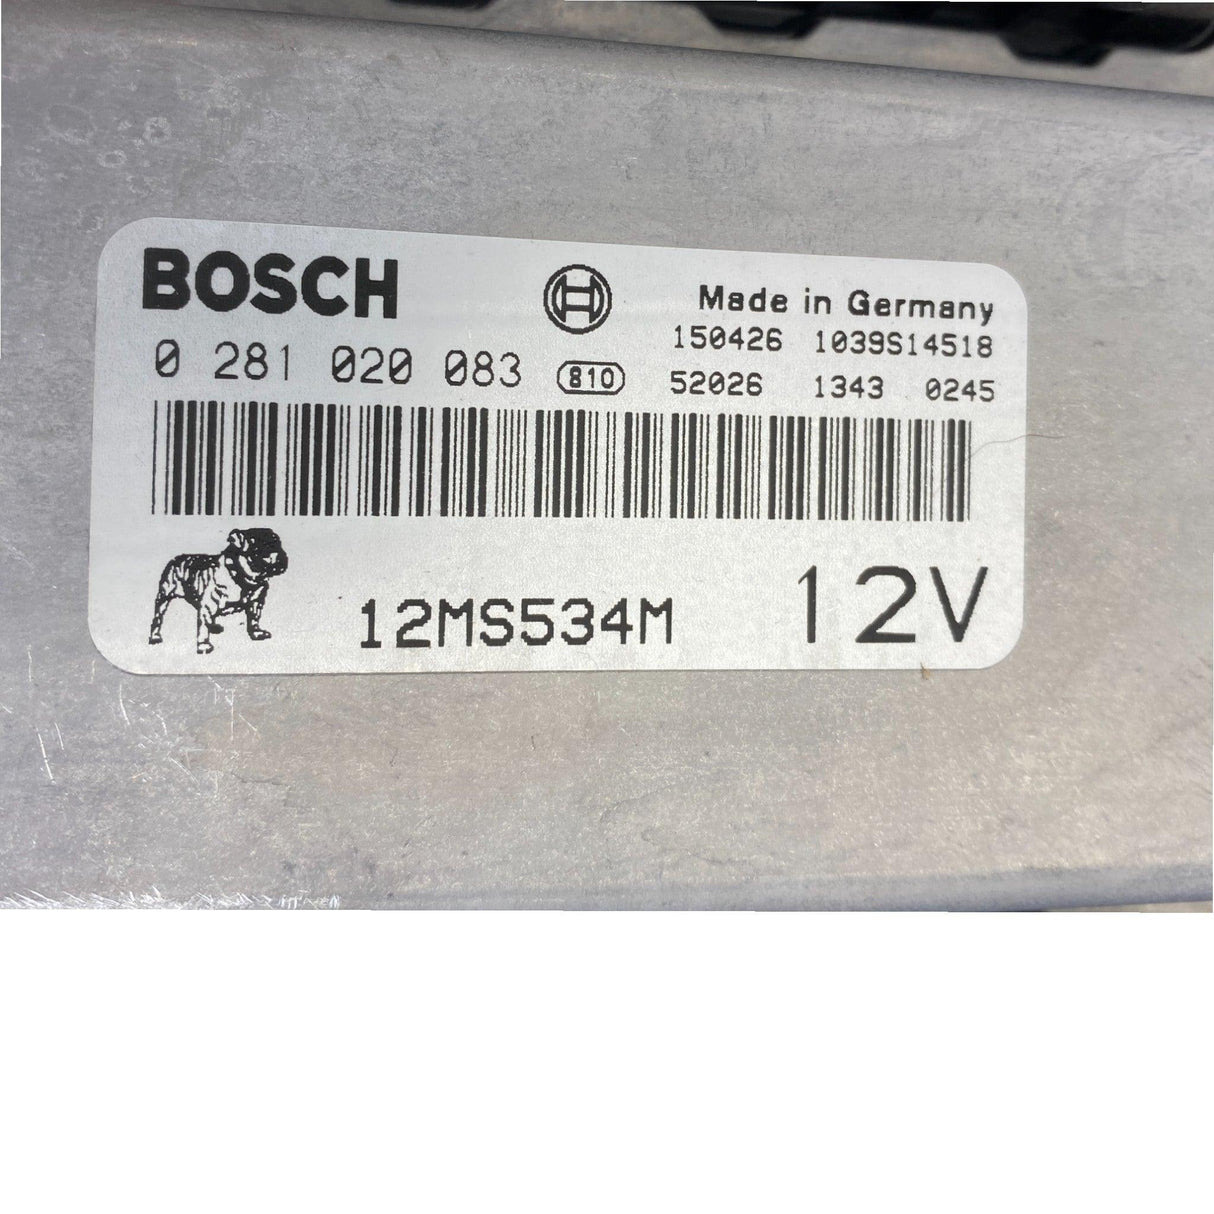 0281020083 Genuine Bosch Ecm Engine Control Module - Truck To Trailer